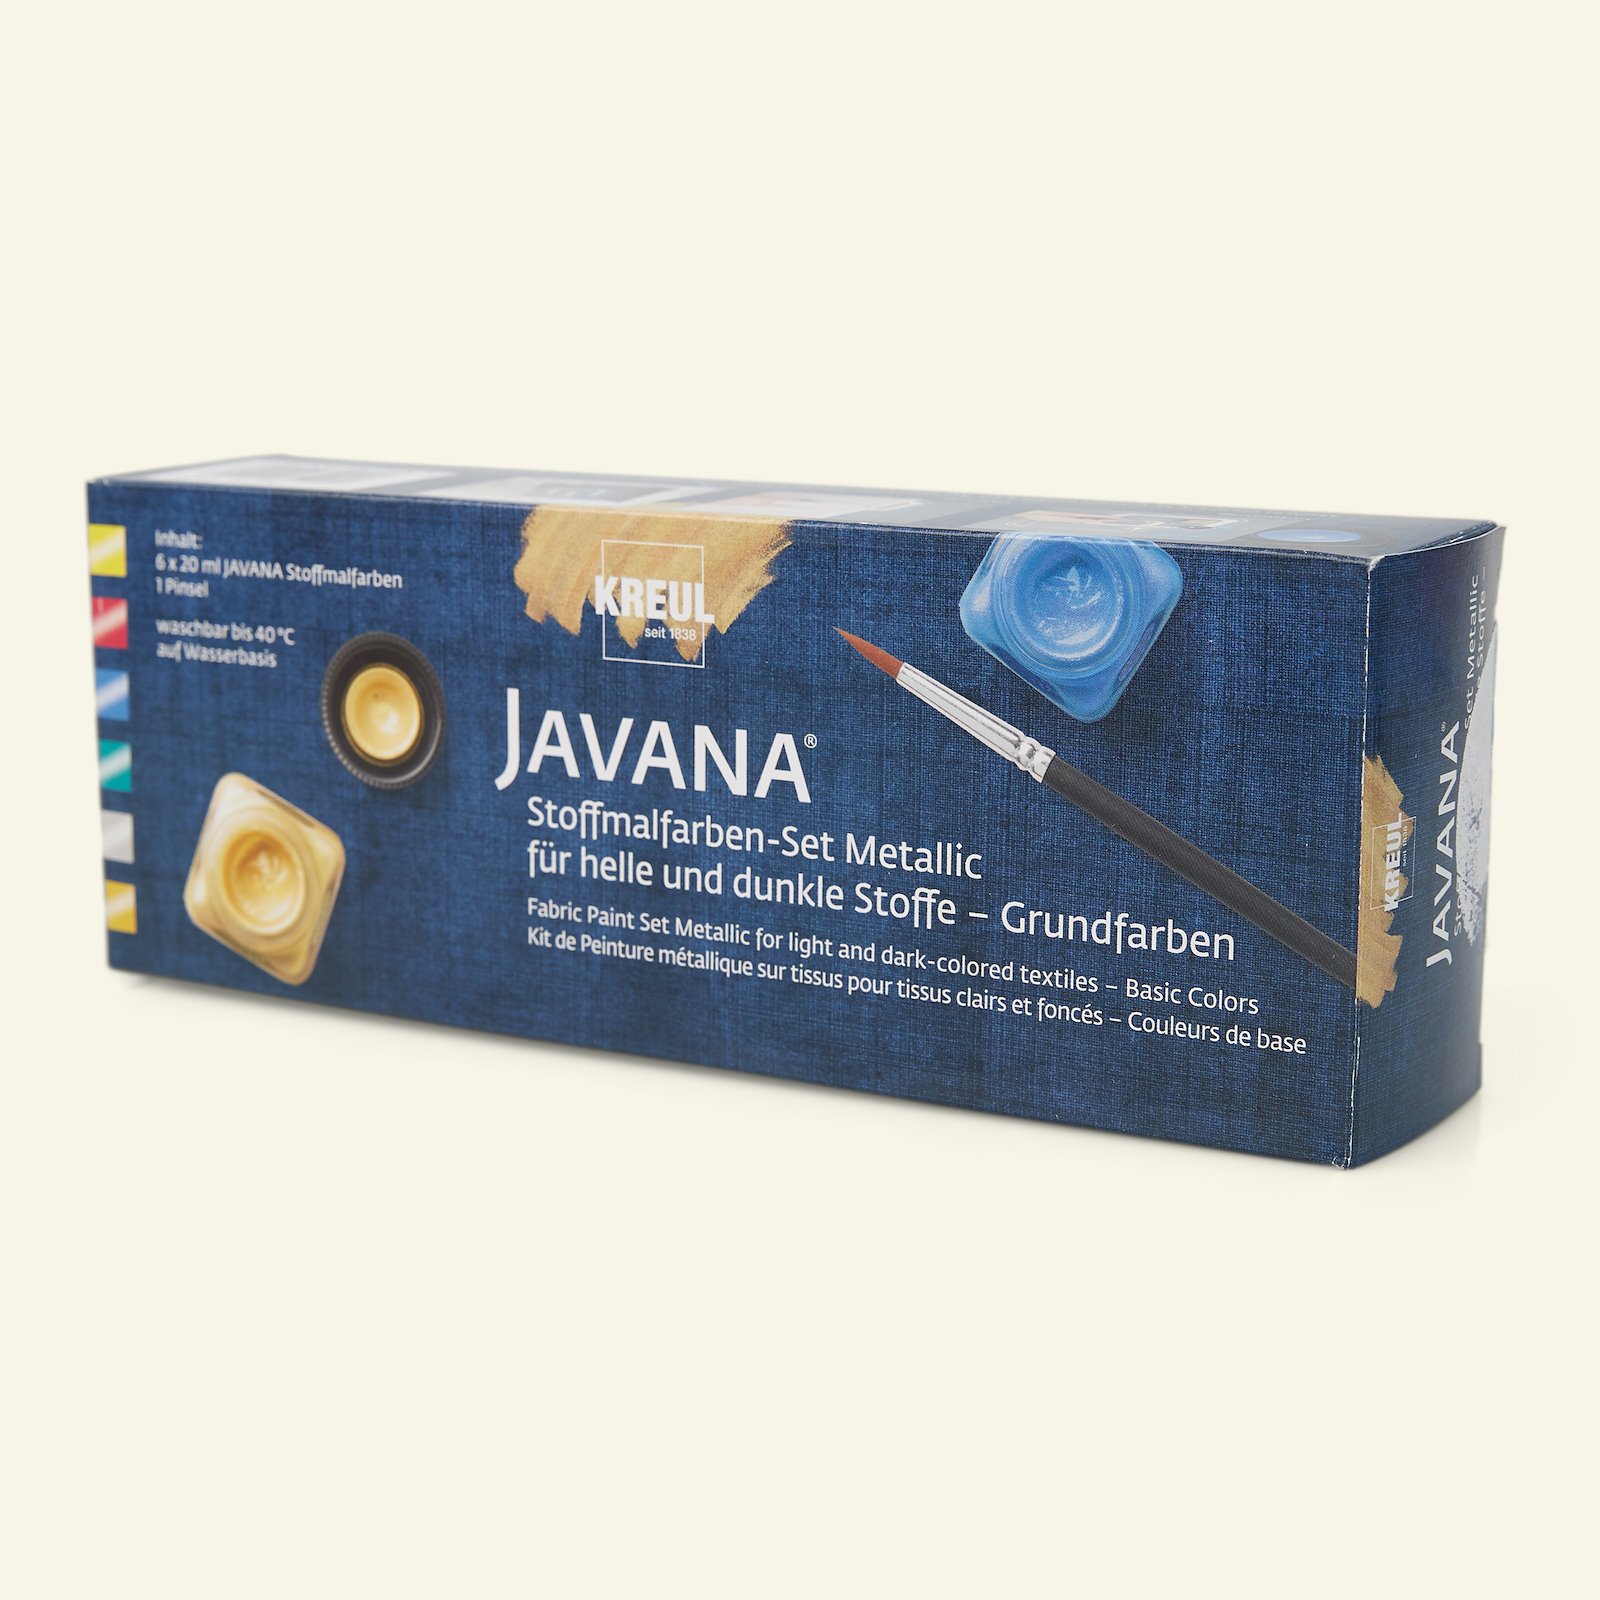 Javana tekstilfarge, metallic, 6x20ml 29550_pack_c